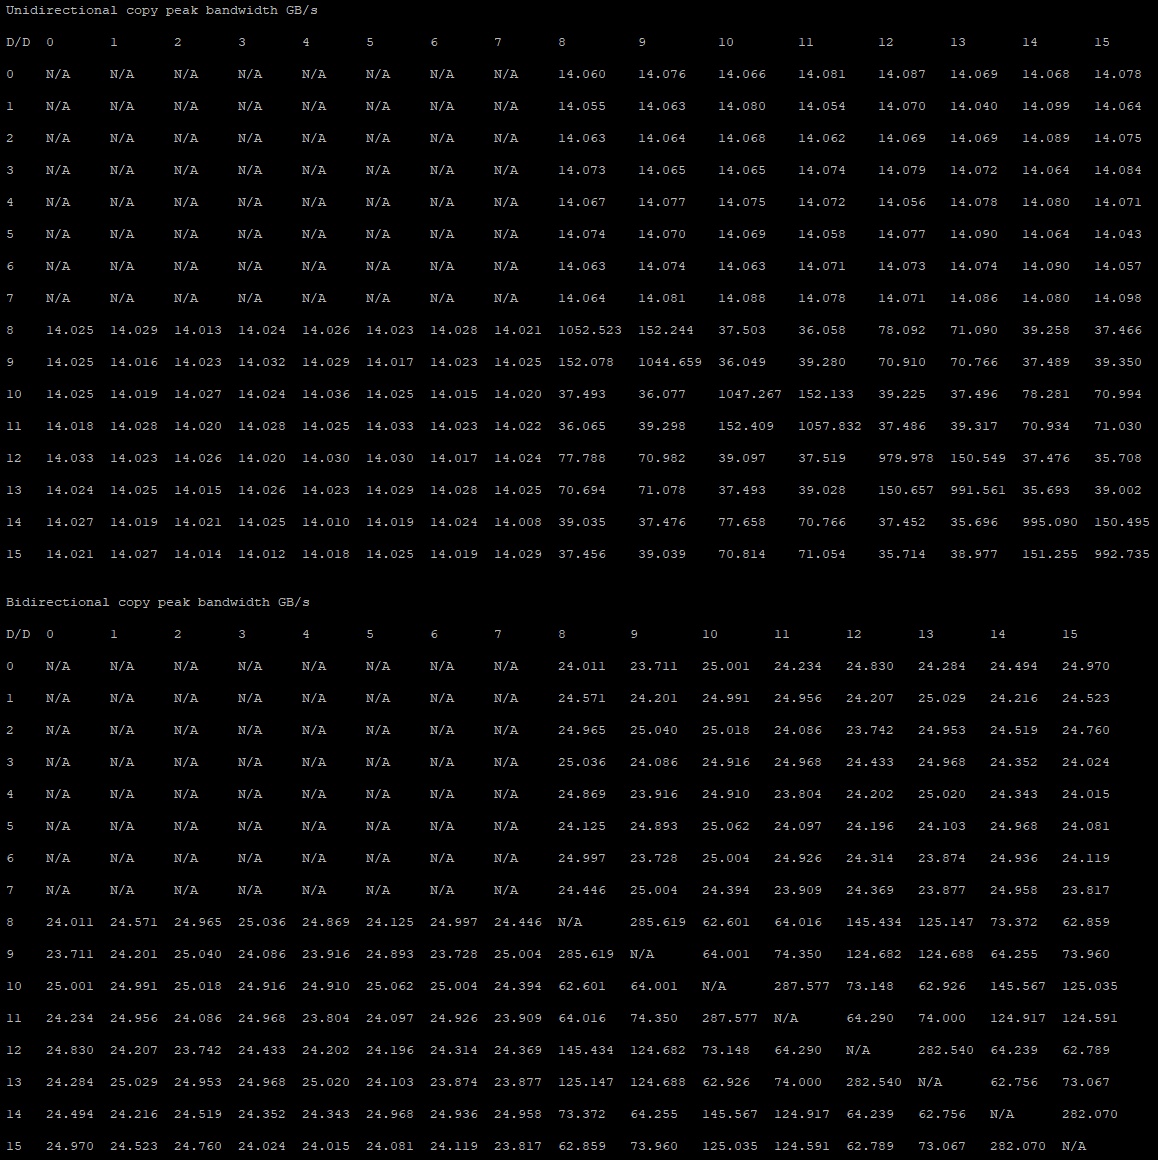 rocm-bandwidth-test output fragment on an 8*MI200 system showing uni- and bidirectional bandwidths.